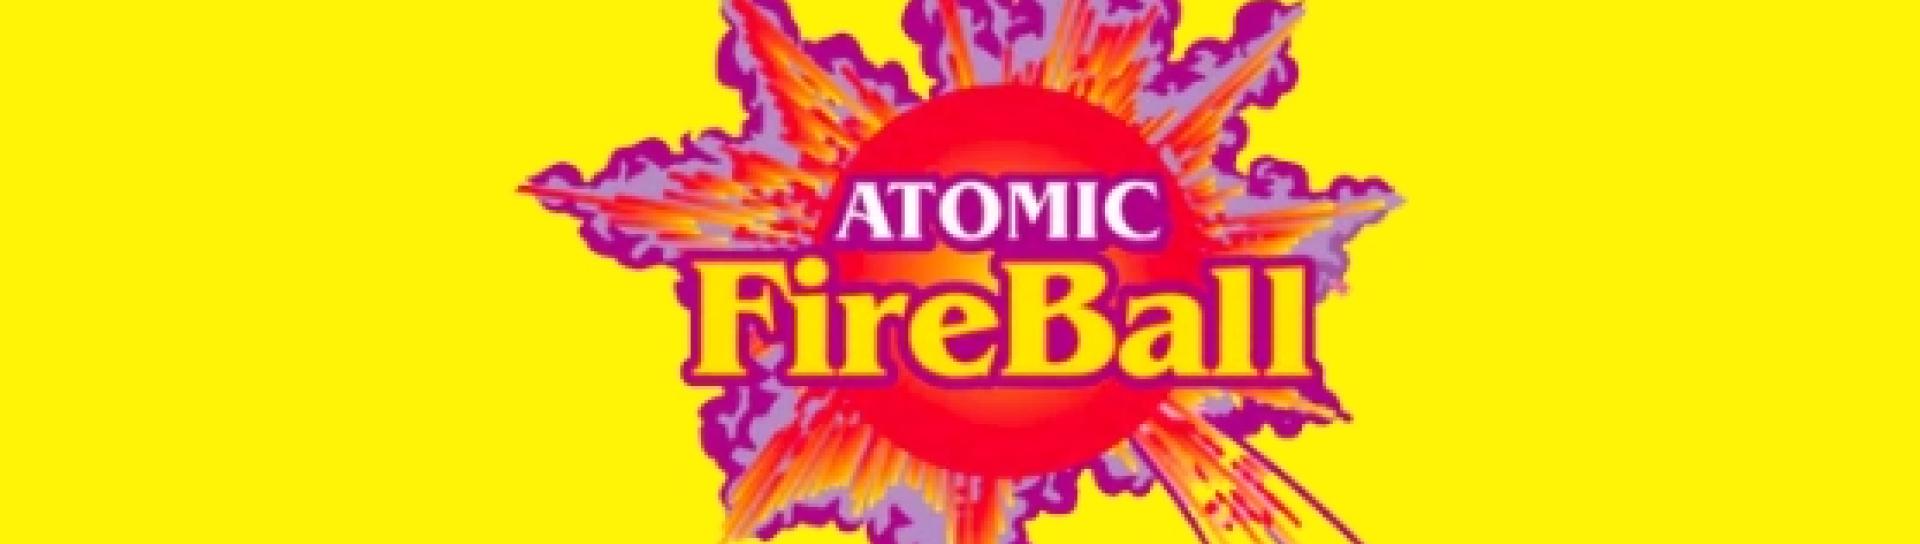 Atomic Fireballs